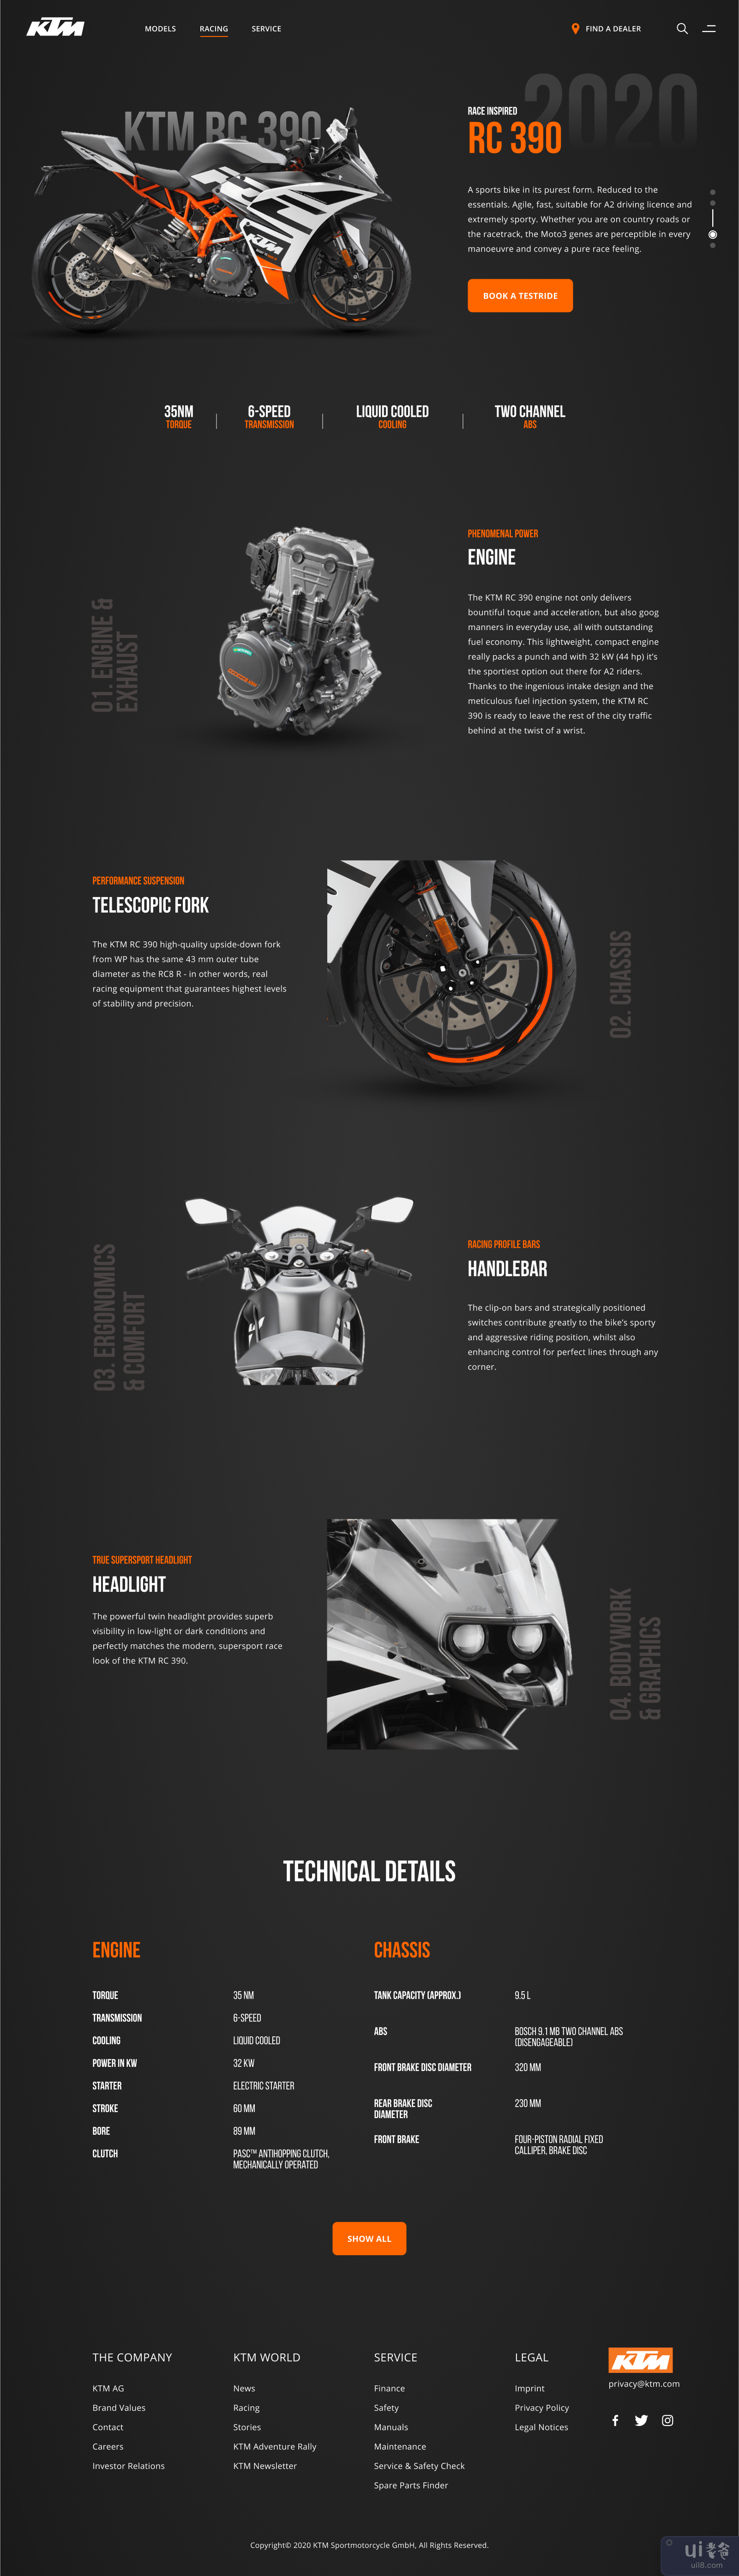 KTM RC 390 - 完整概念(KTM RC 390 - Full Concept)插图